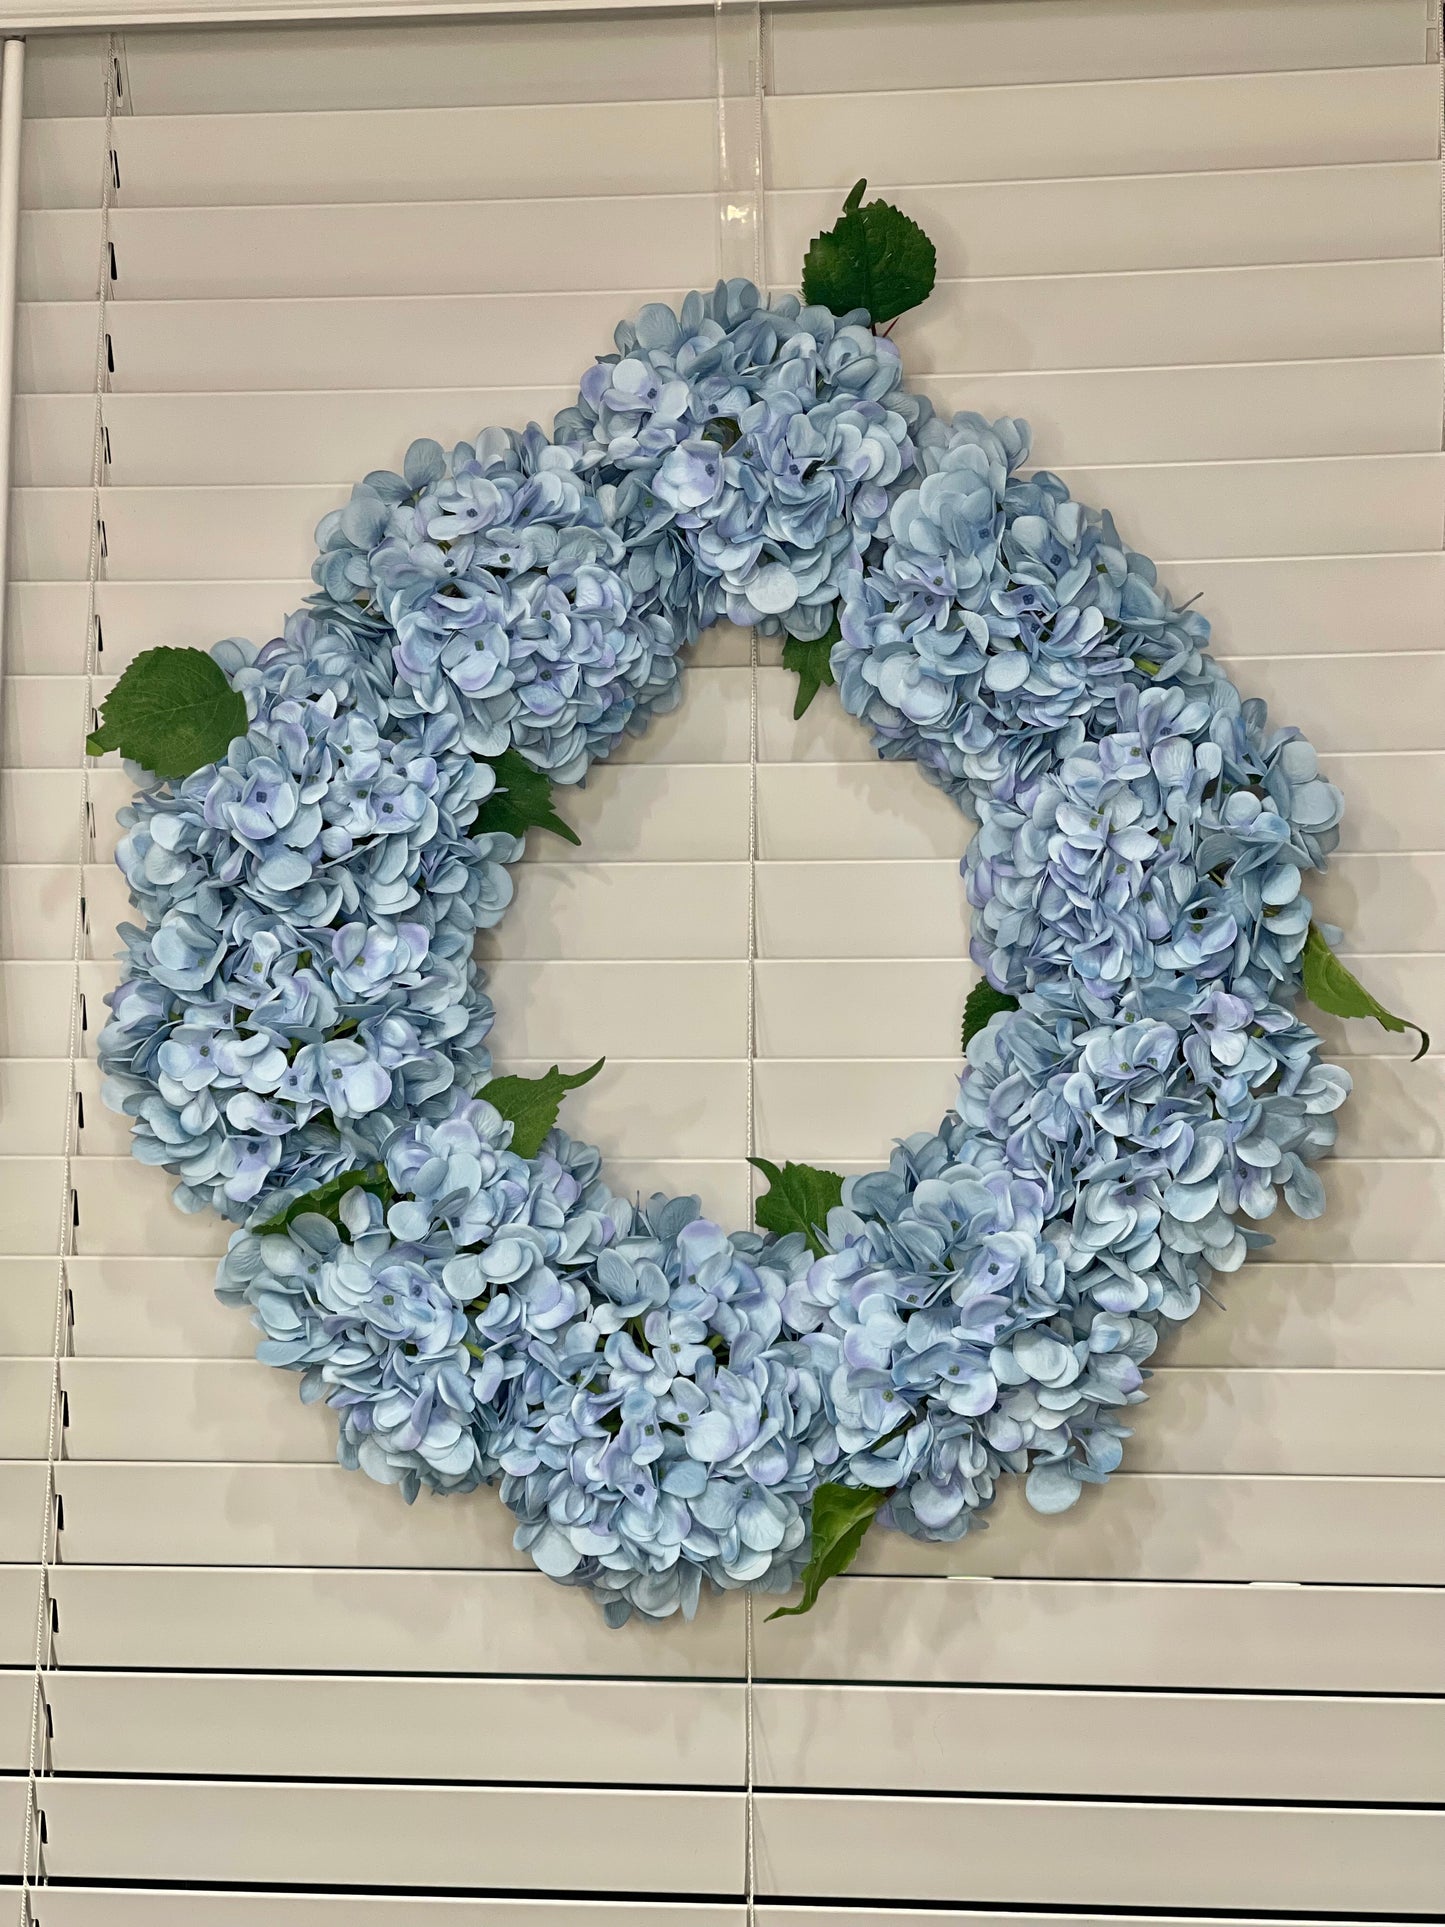 Large Luxury Blue Silk Hydrangea Wreath, 24in All Season UV Resistant